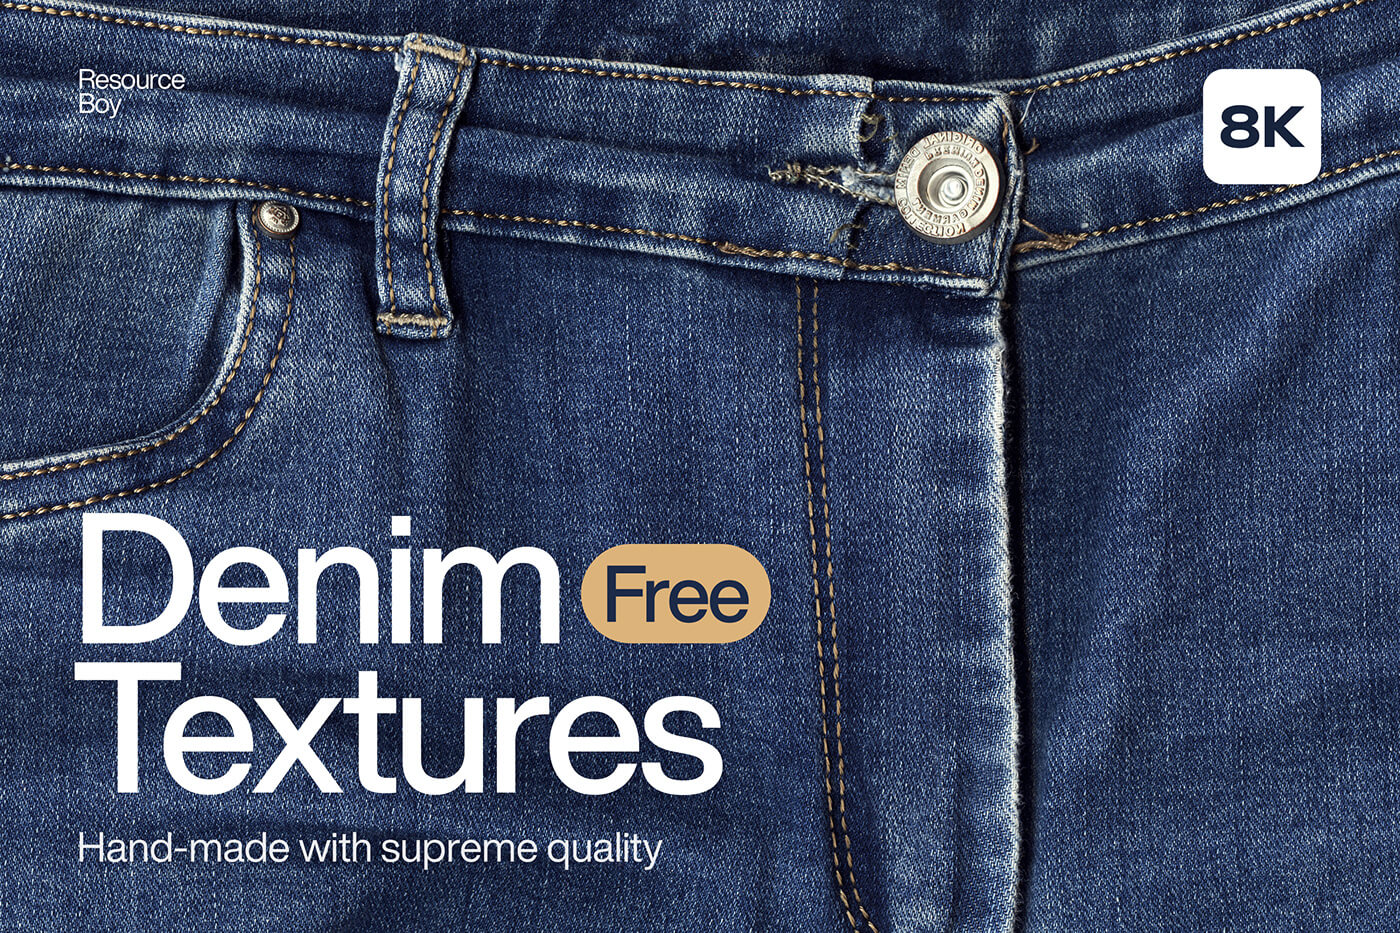 40 Free Denim Textures To Download (8K Resolution)